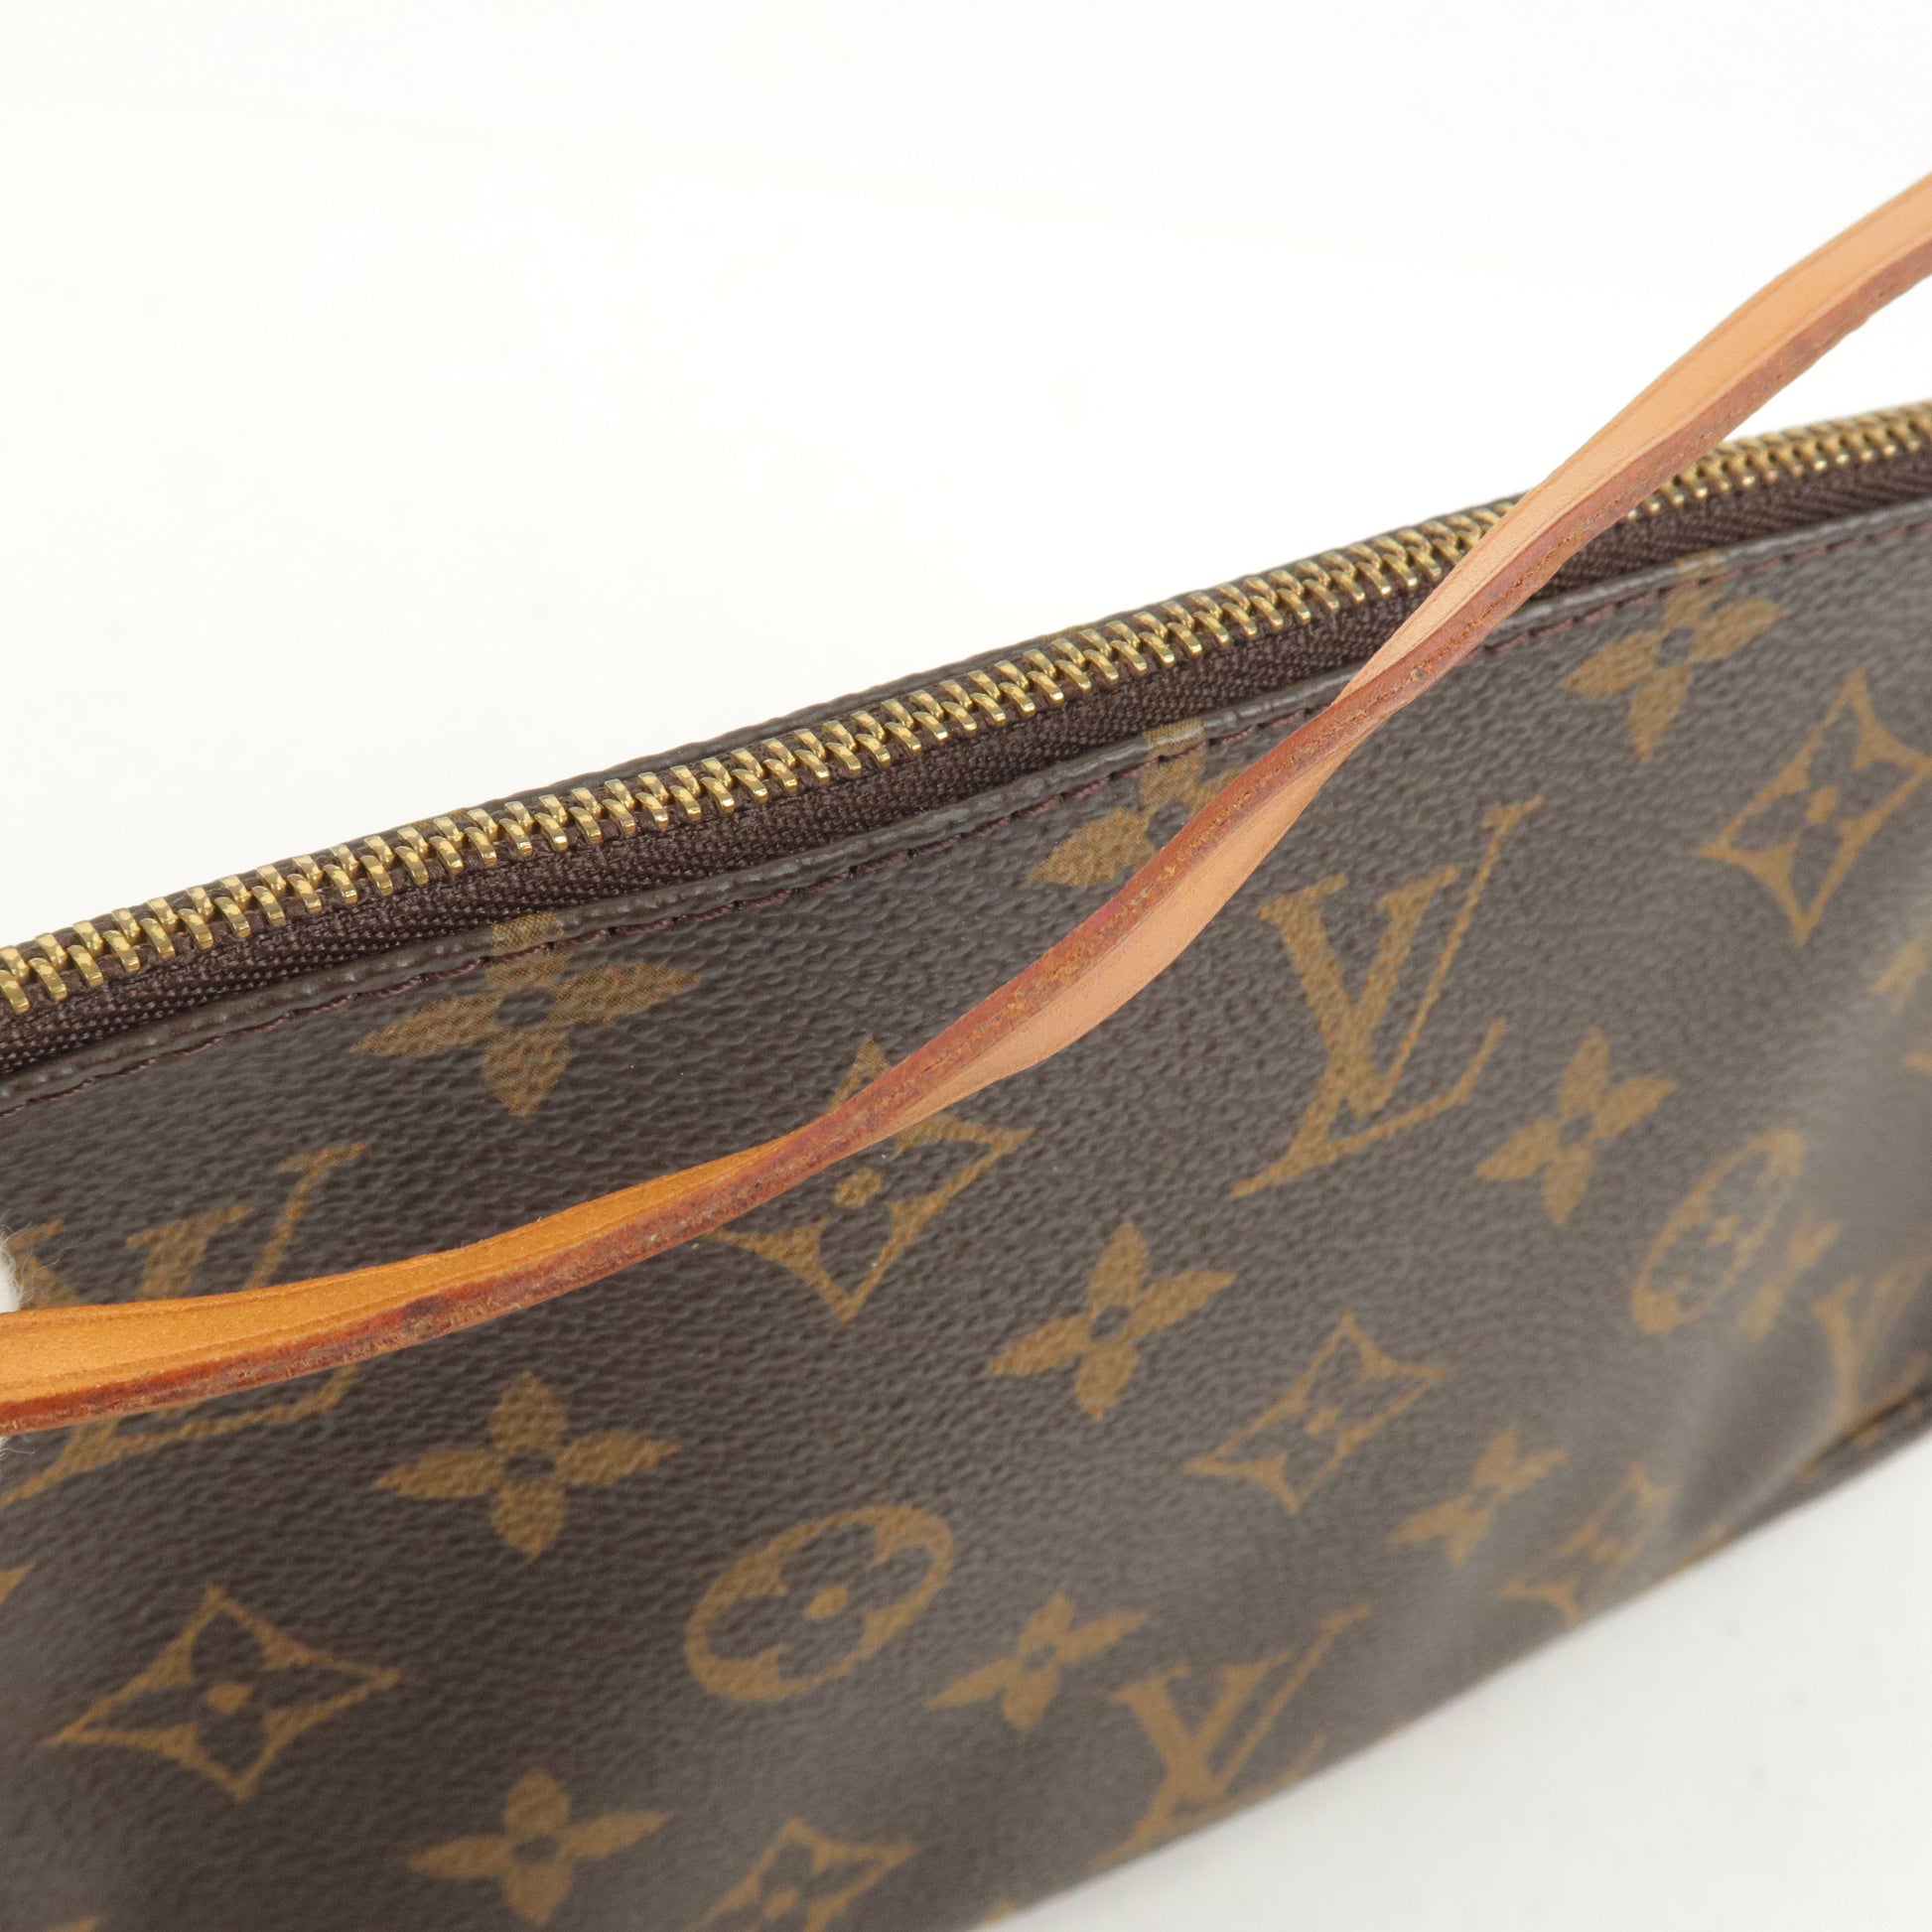 Louis Vuitton, Bags, Louis Vuitton Neverfull Pochette Mm Monogram Brown